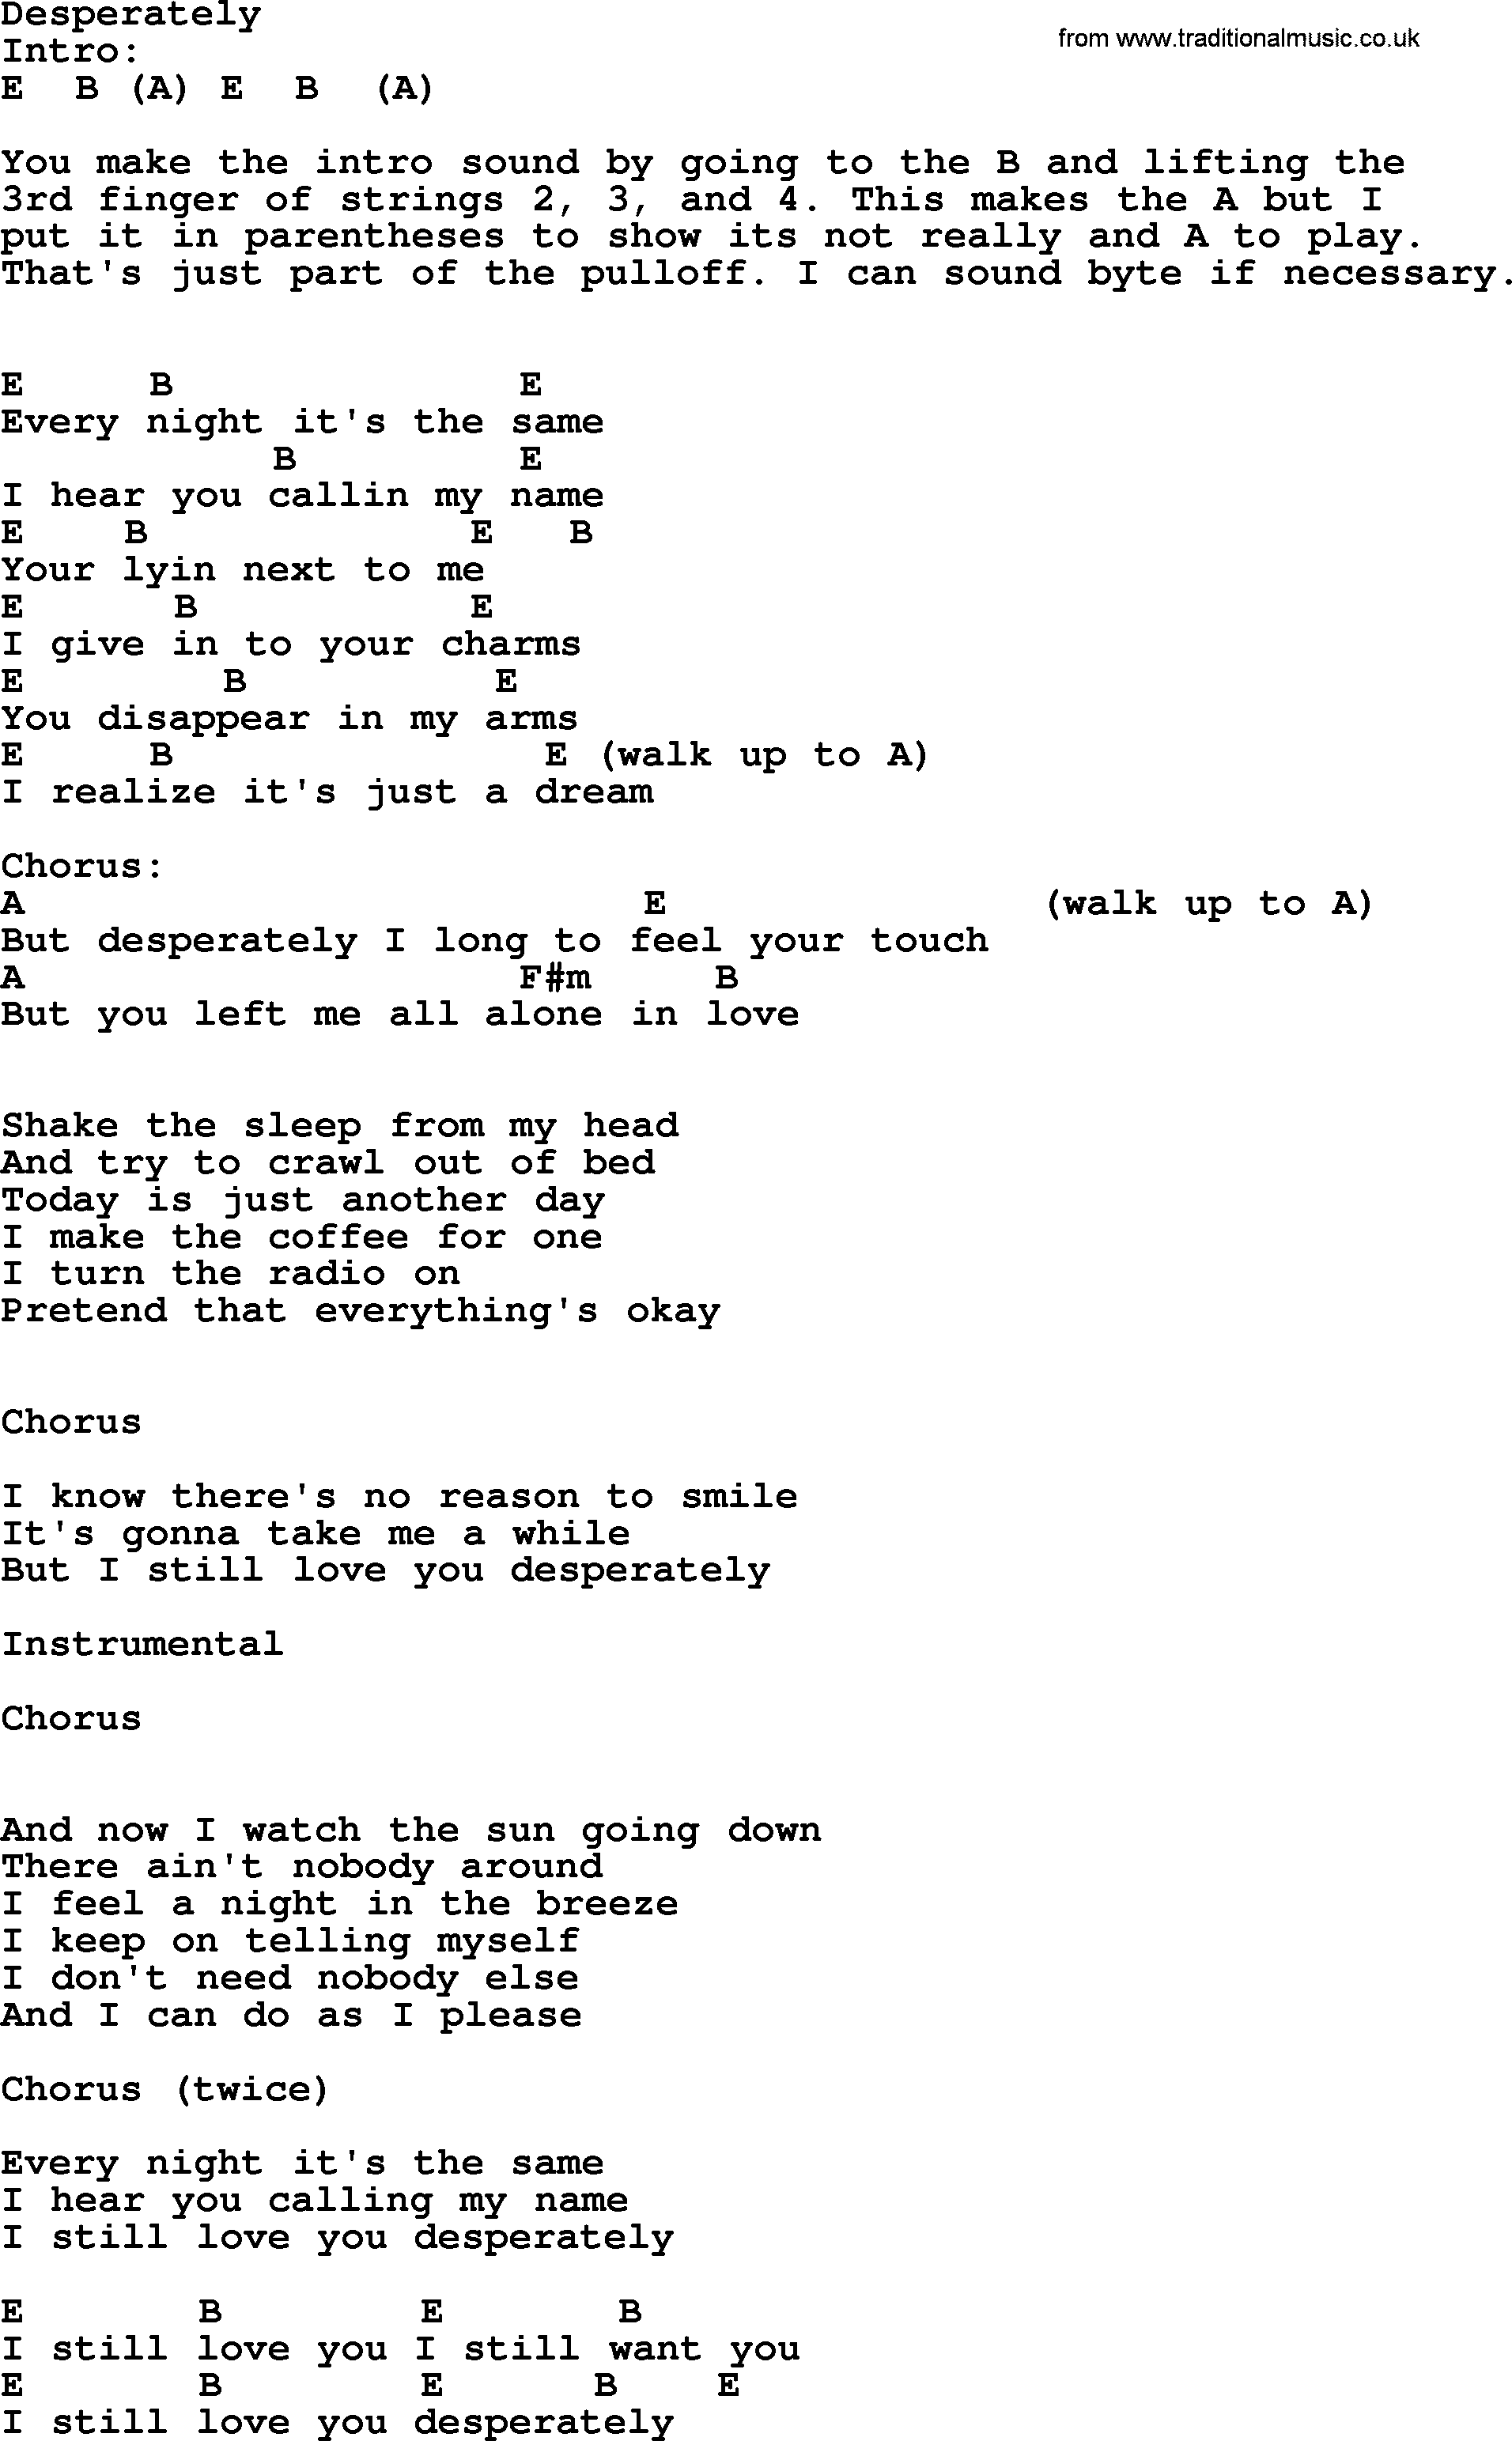 George Strait song: Desperately, lyrics and chords